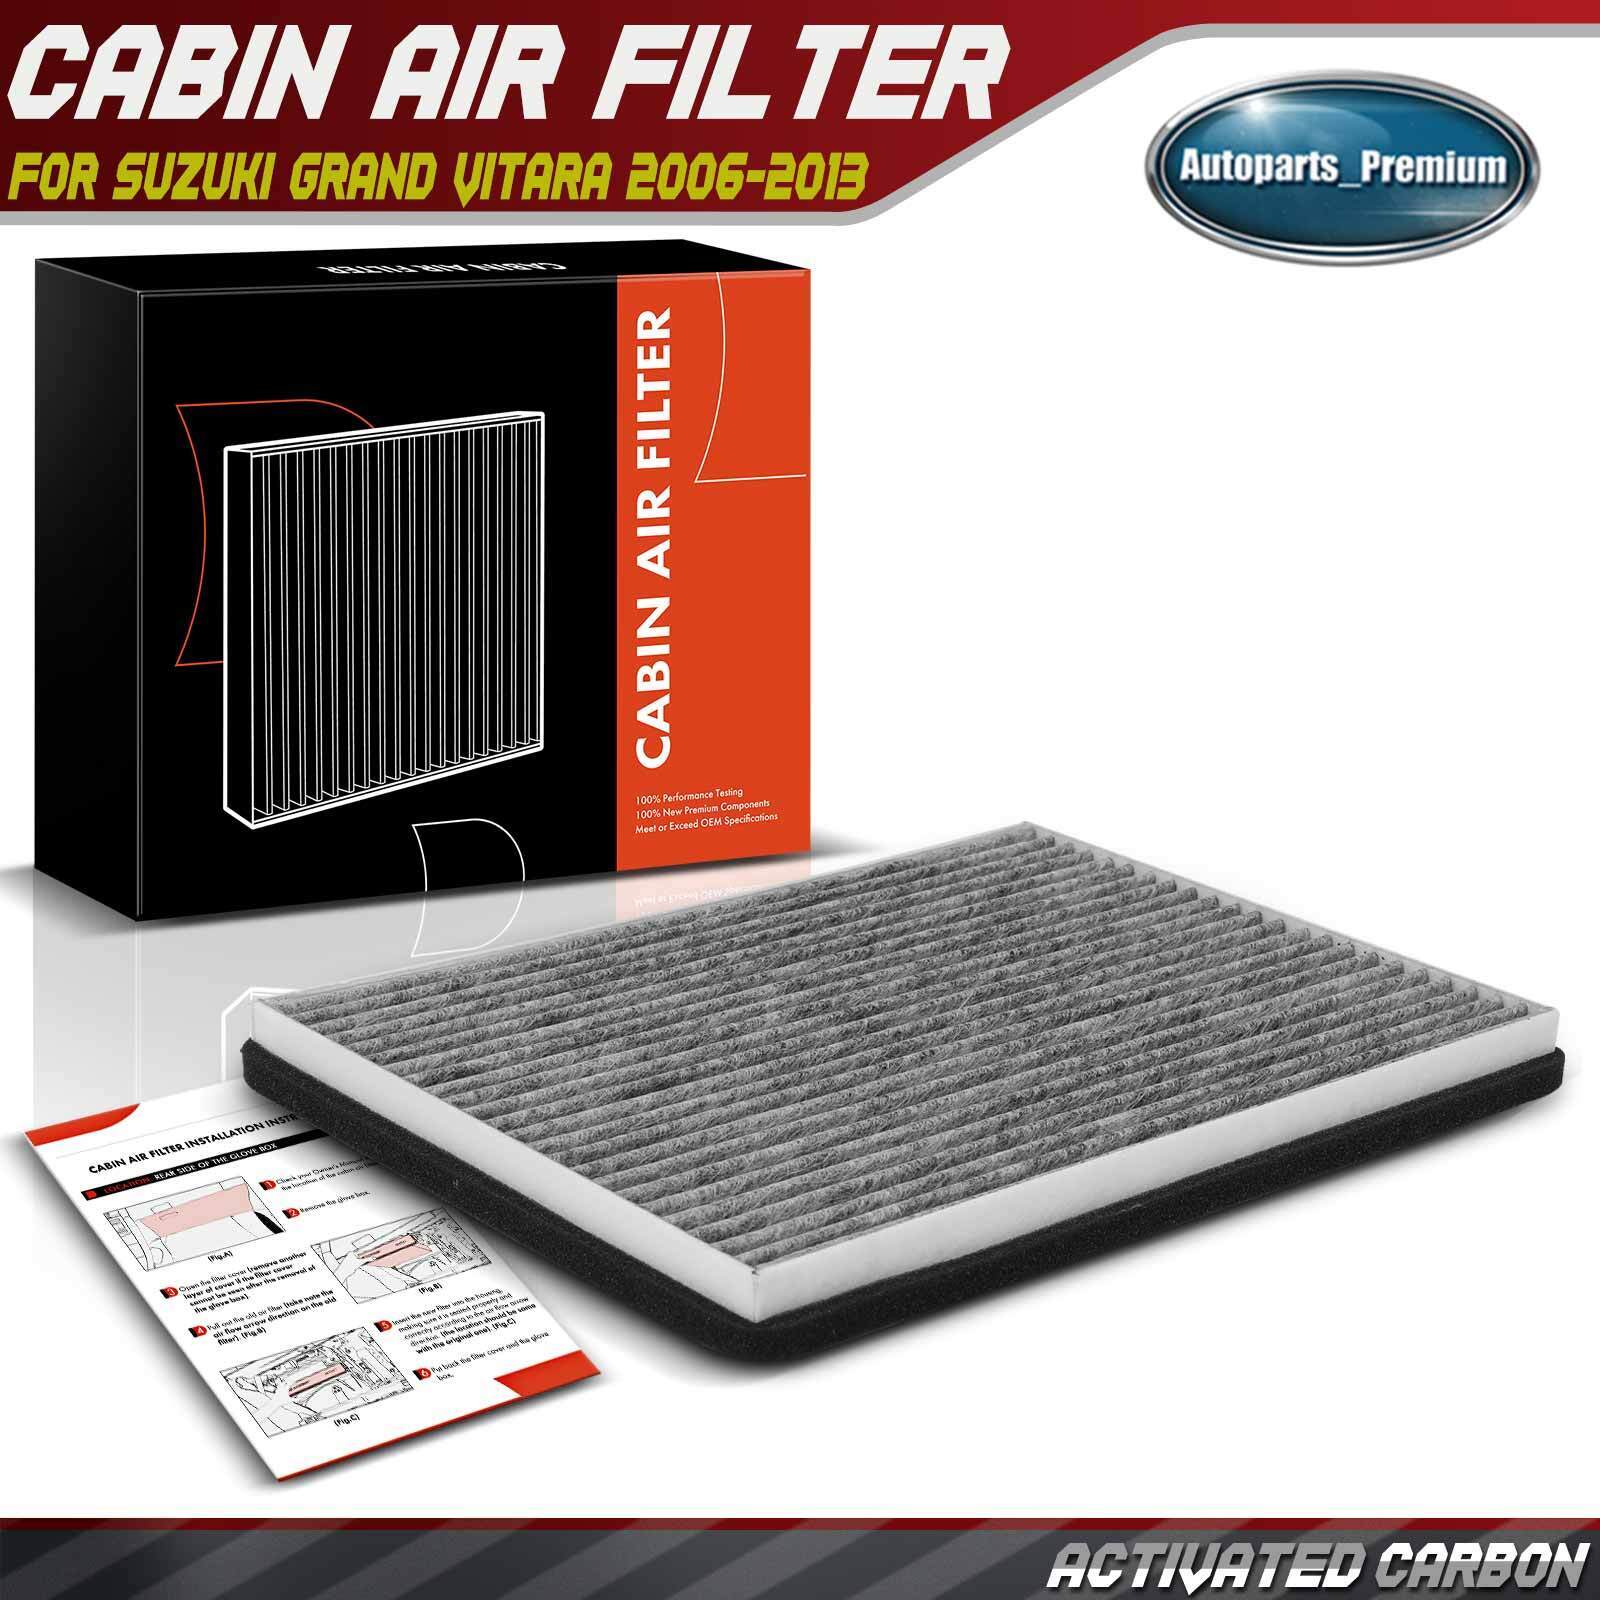 Activated Carbon Cabin Air Filter for Suzuki Grand Vitara 2006 2007 2008-2013